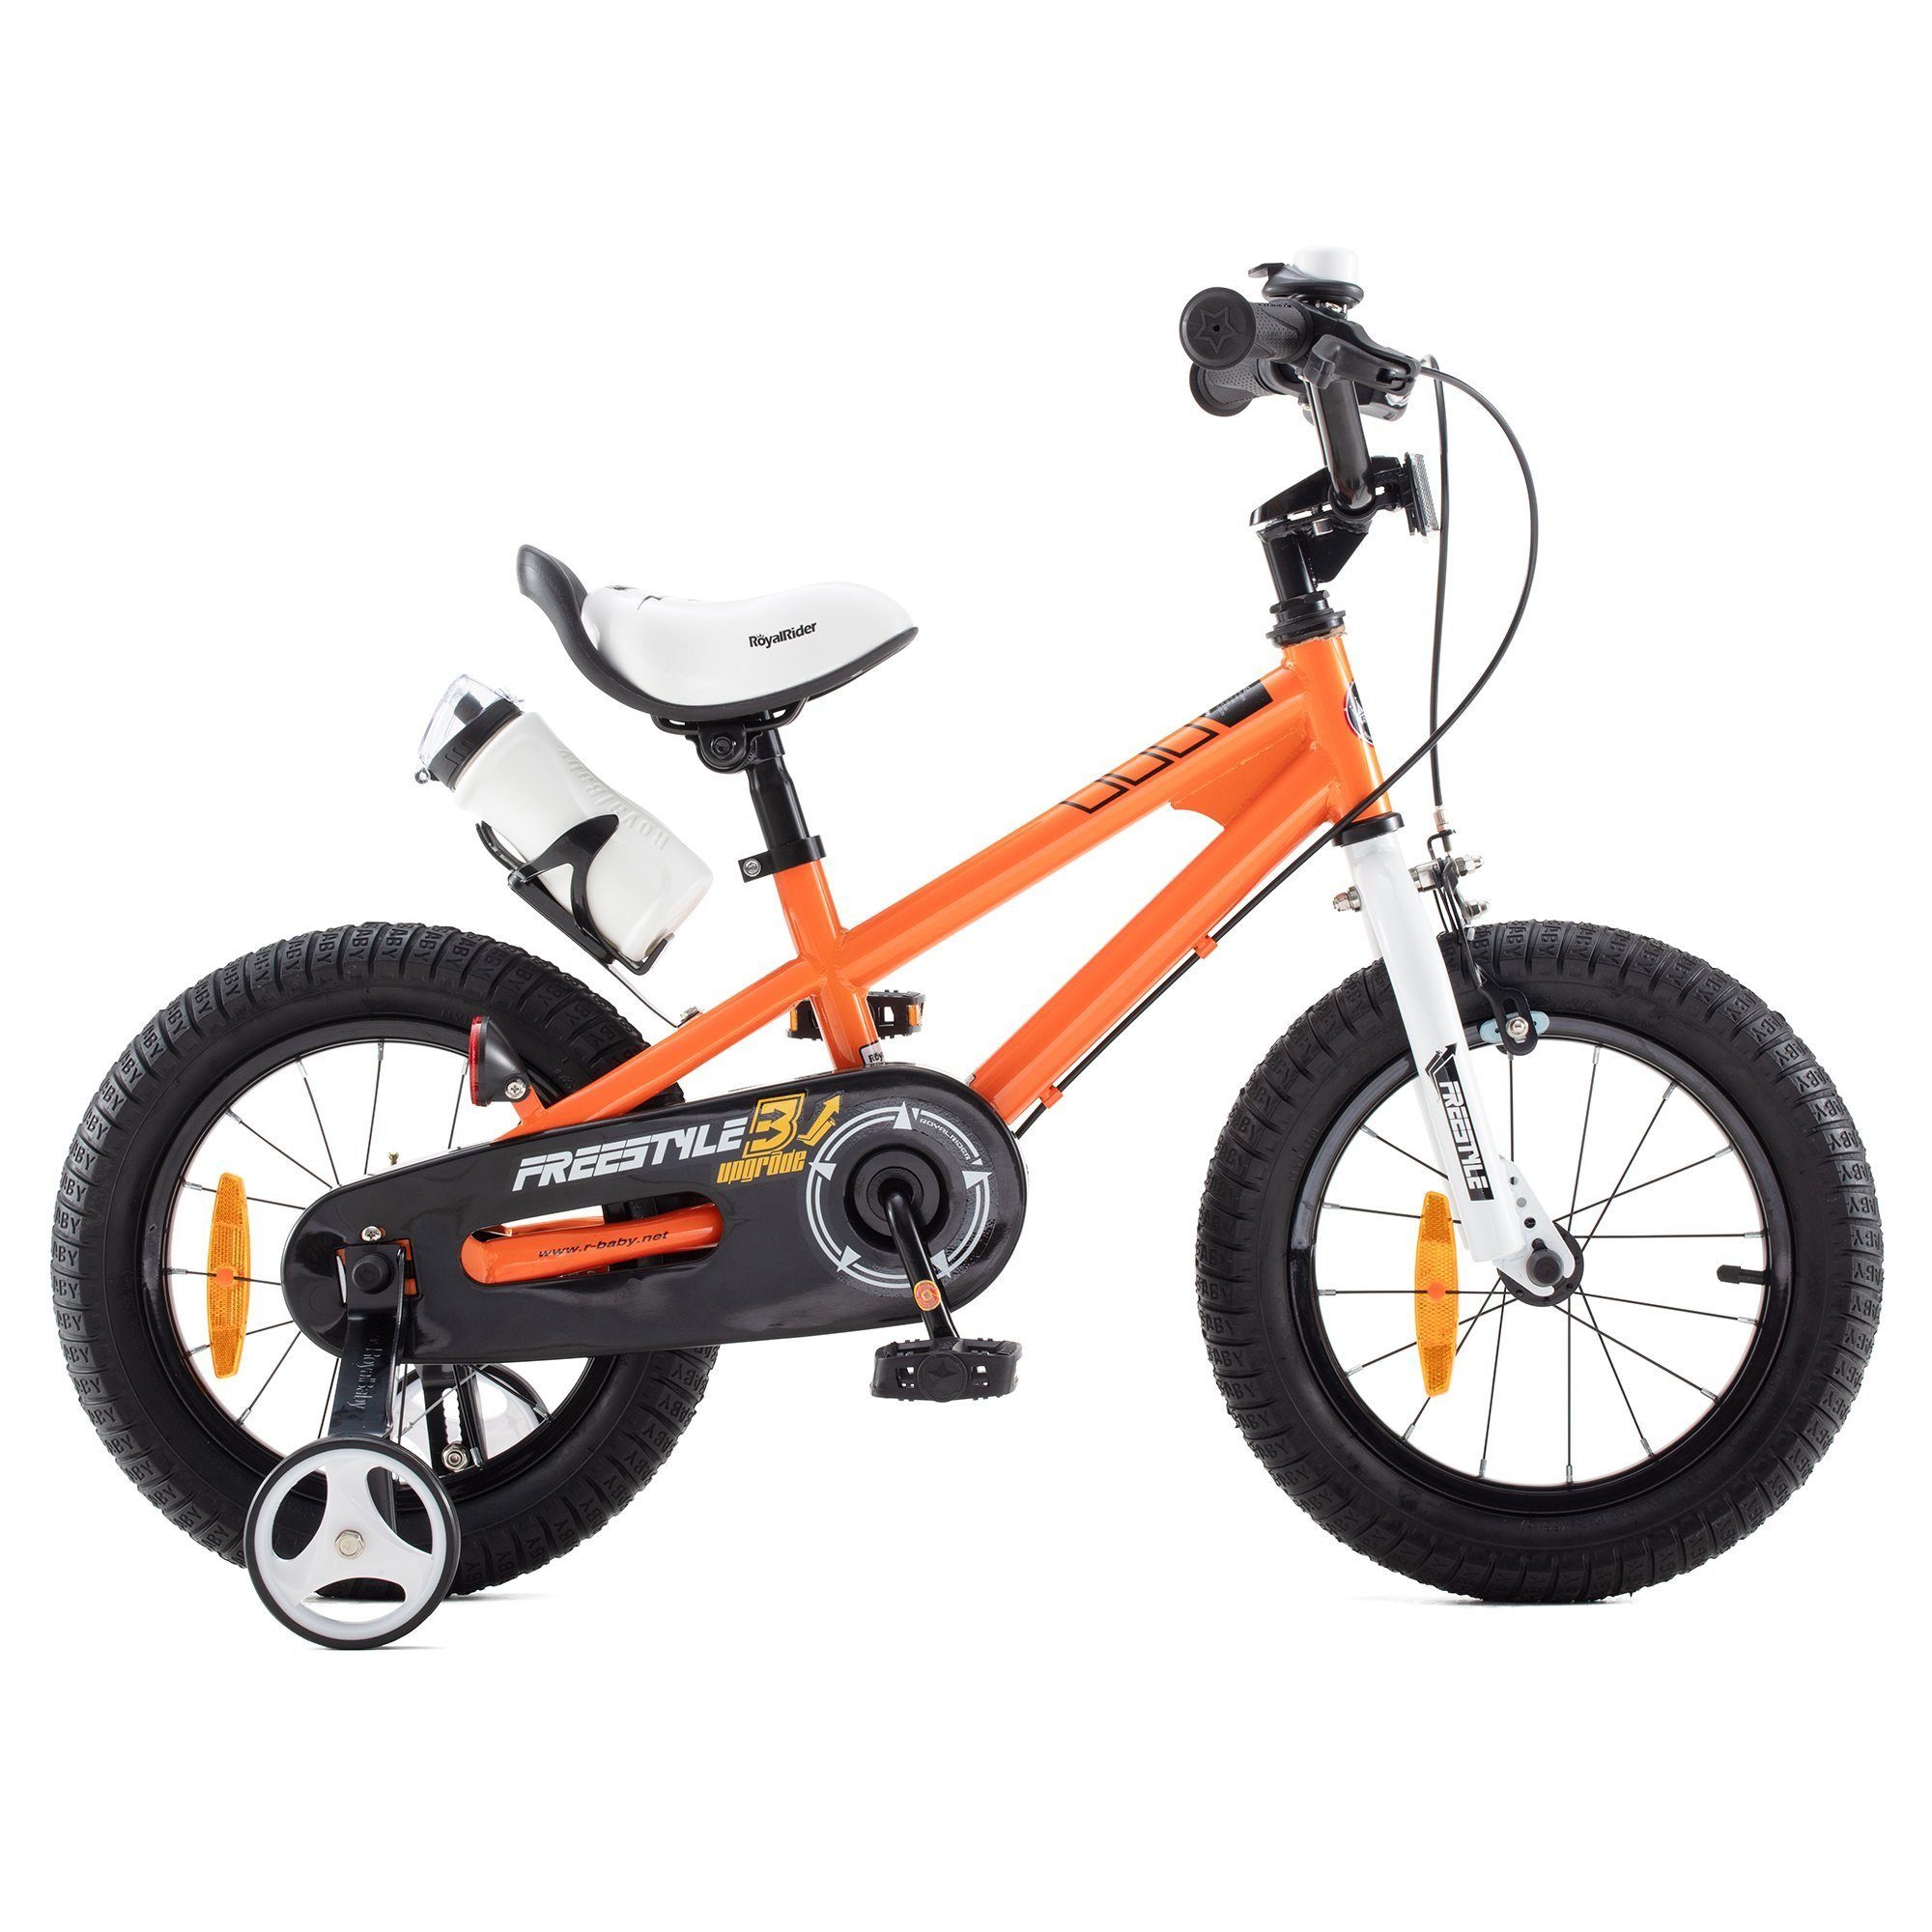 Dino BMX Fahrrad Kinderfahrrad Kinder Fahrrad 12 Zoll 18 cm Kleinkinder orange 